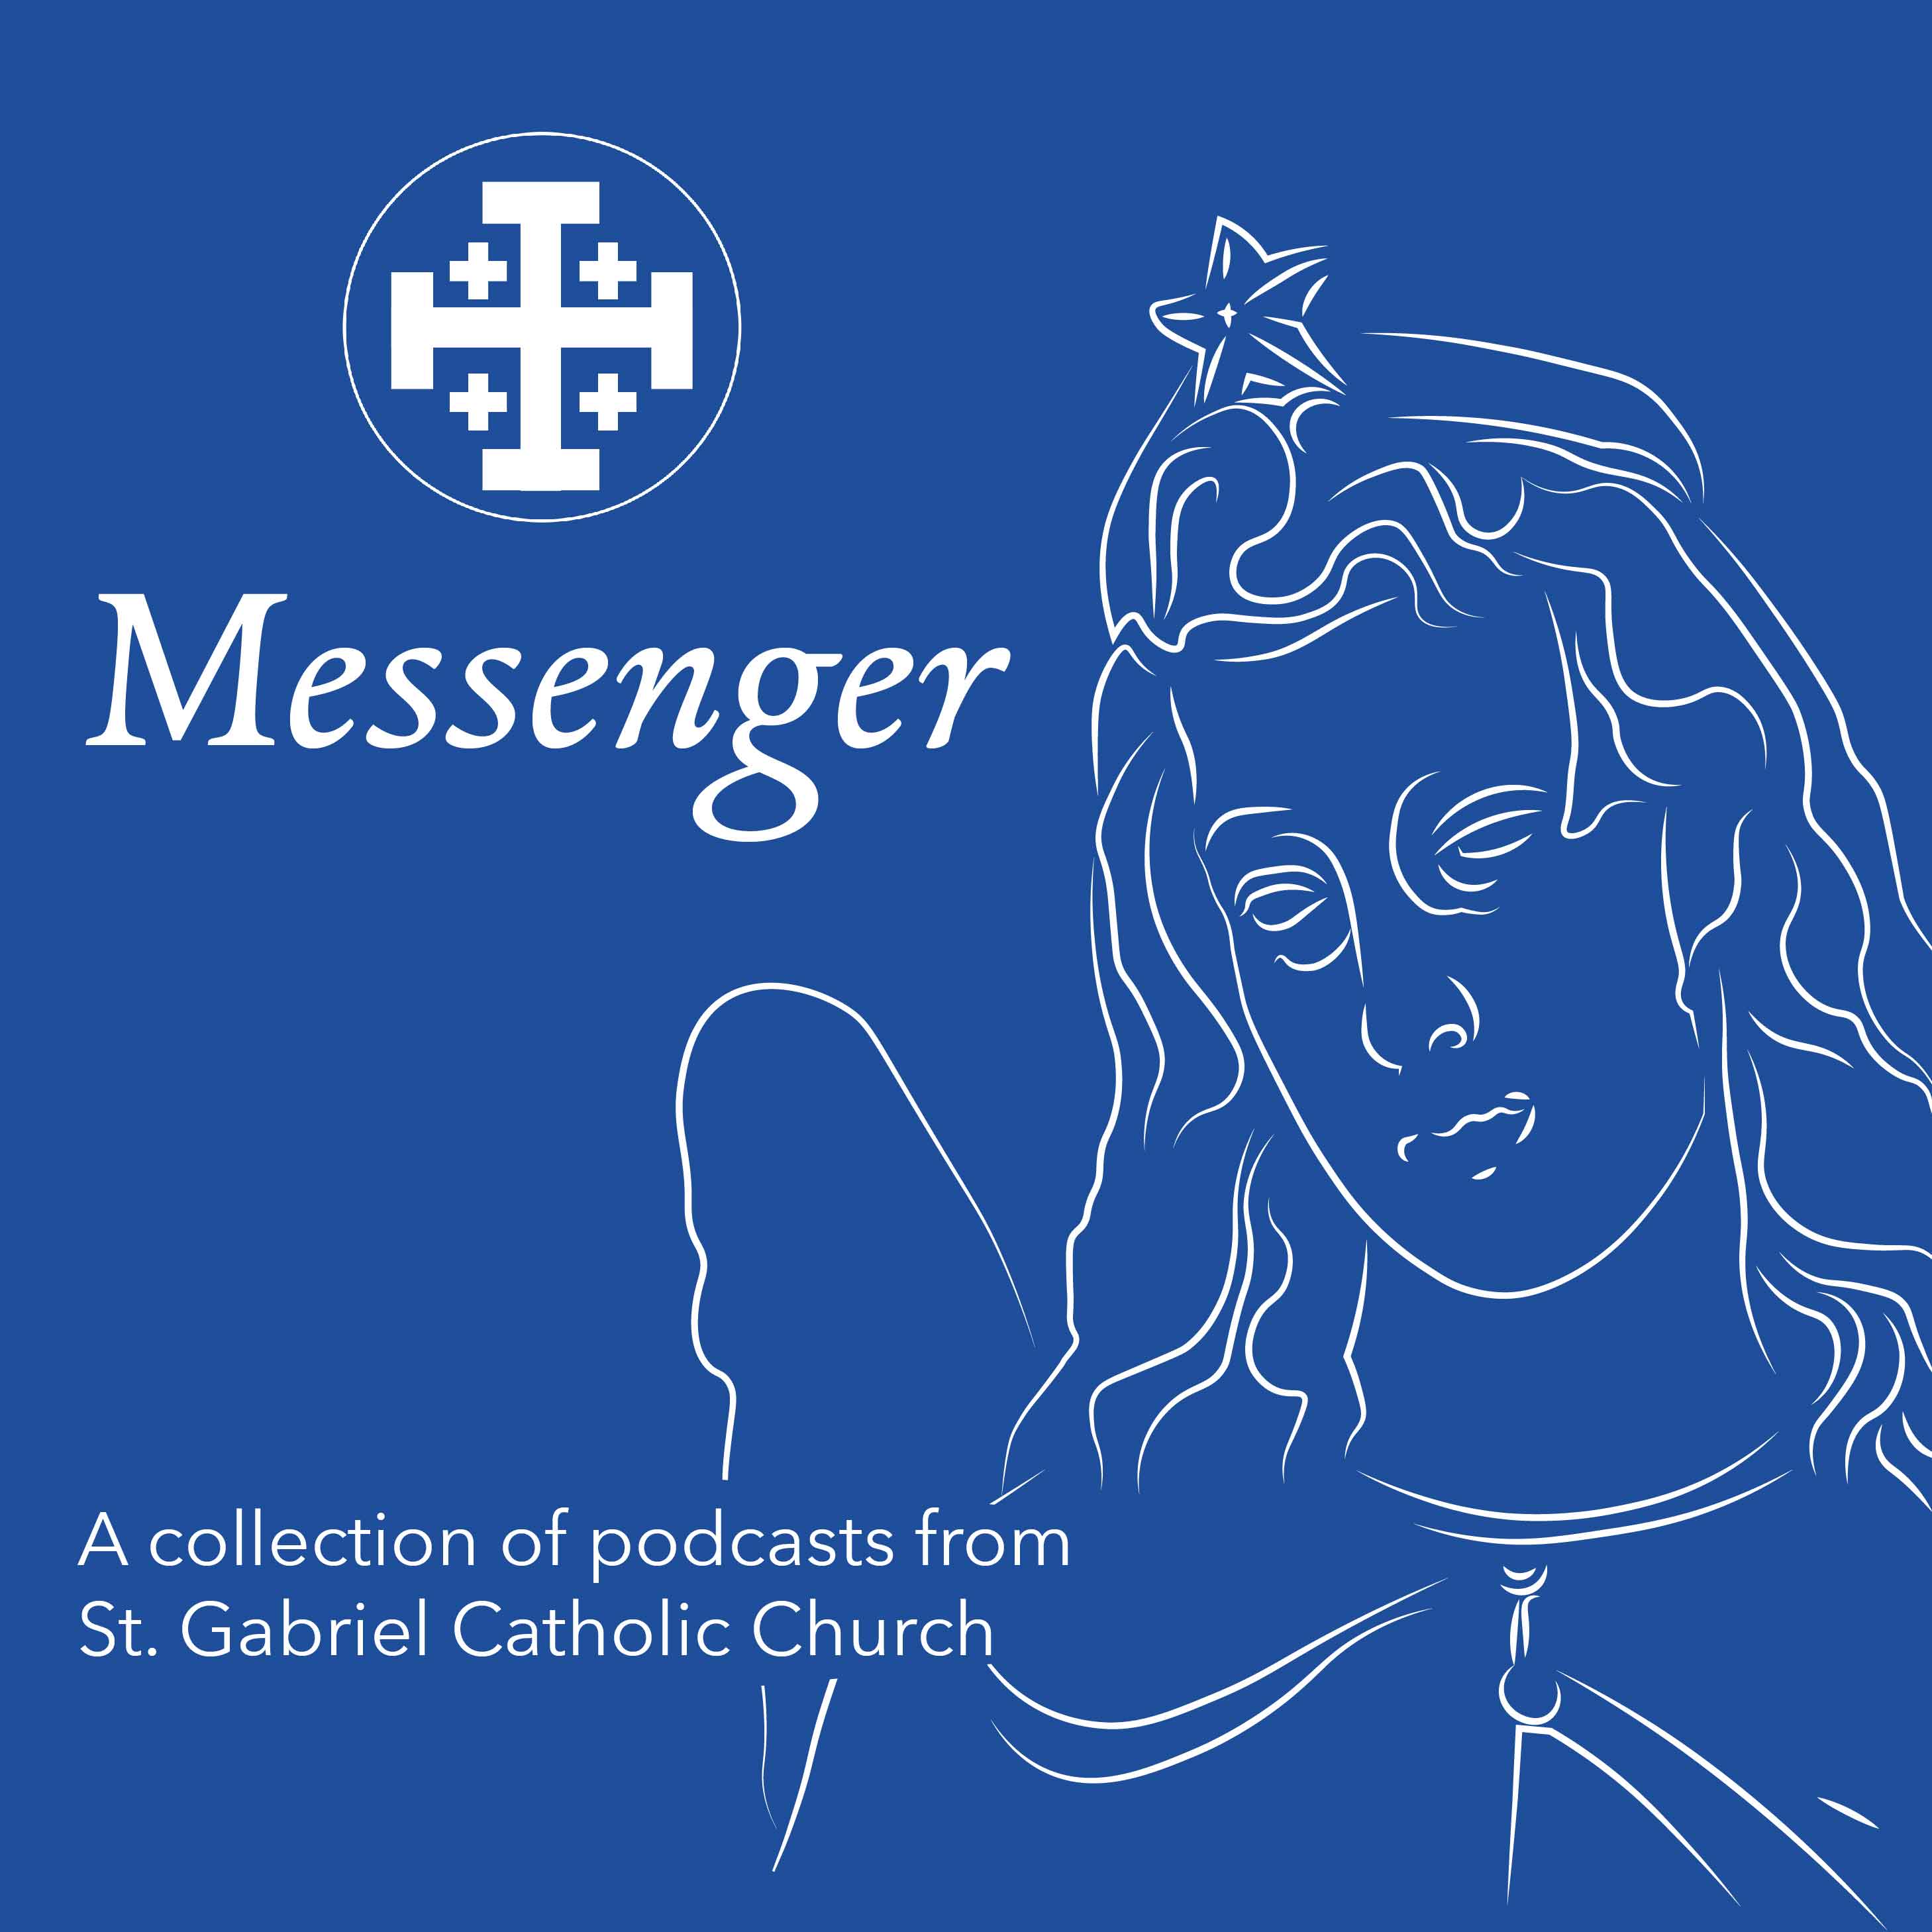 Messenger by St. Gabriel Catholic Church